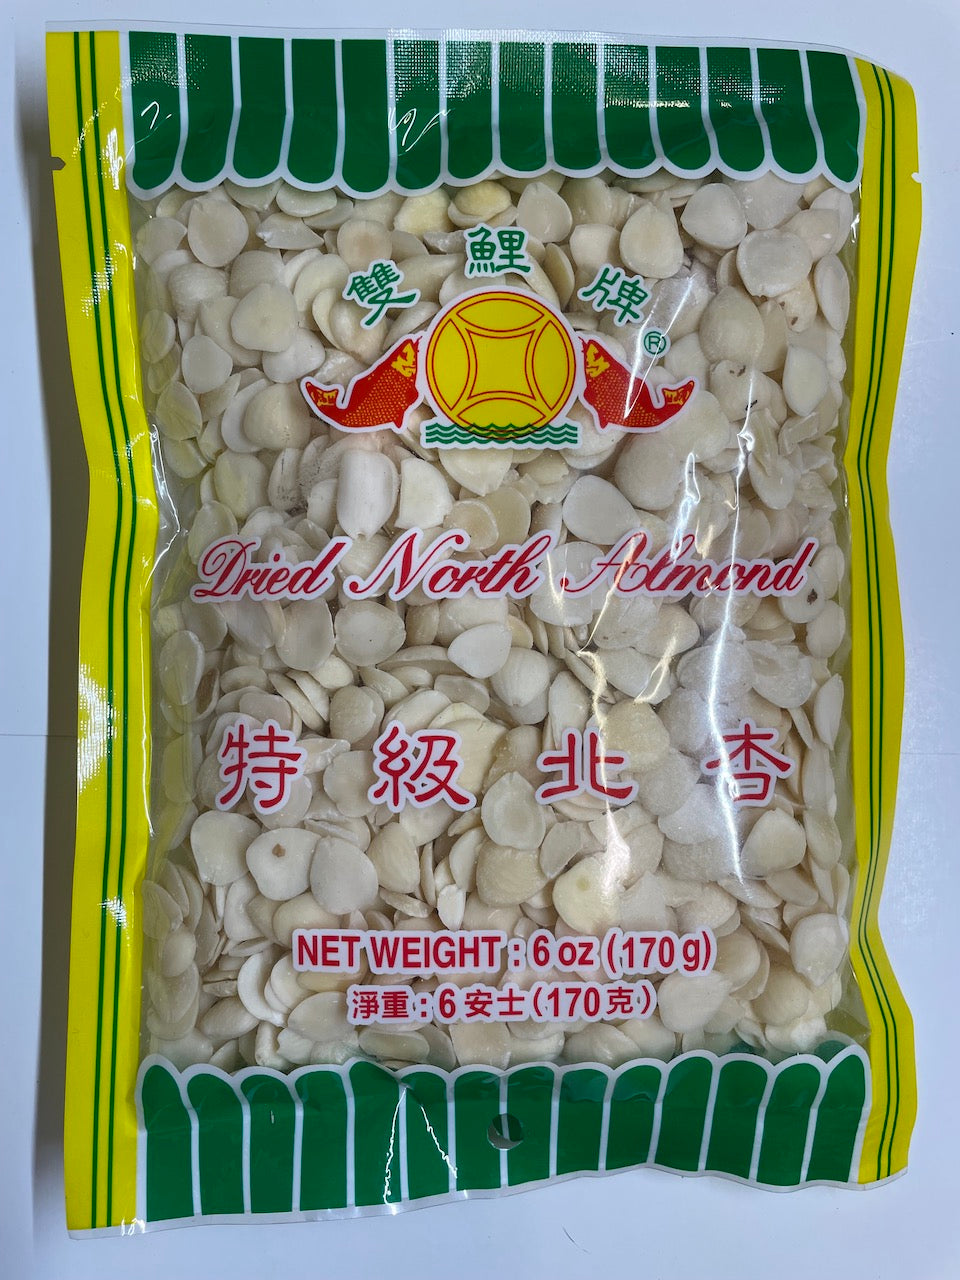 Dried North Almond Bei Xing 特级北杏 6oz